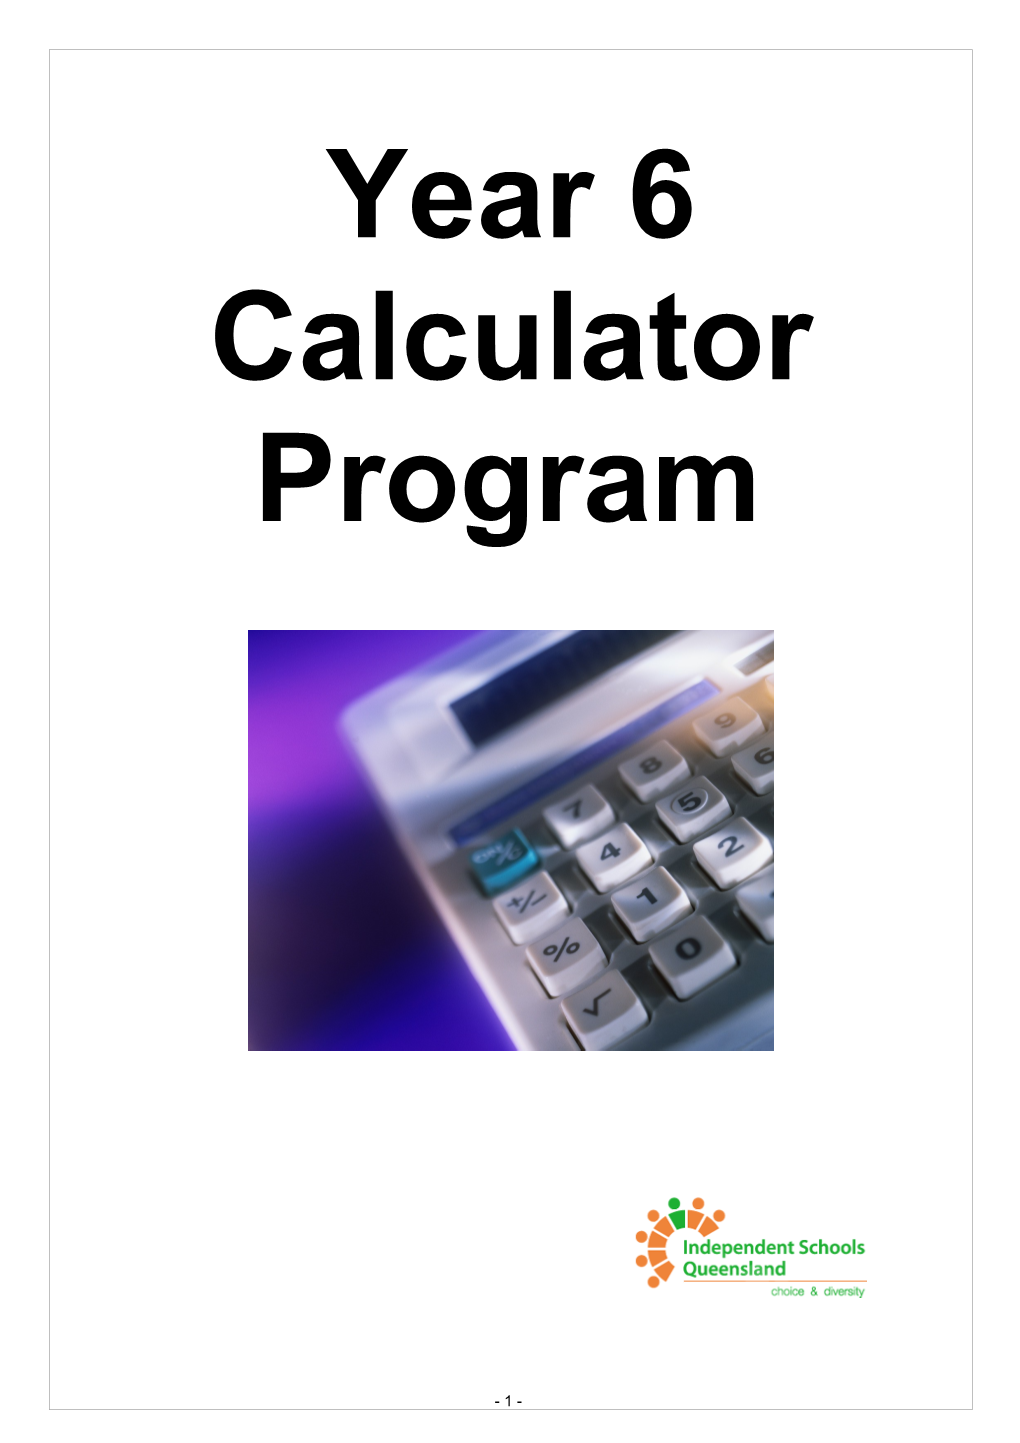 Year 6 Calculator Program